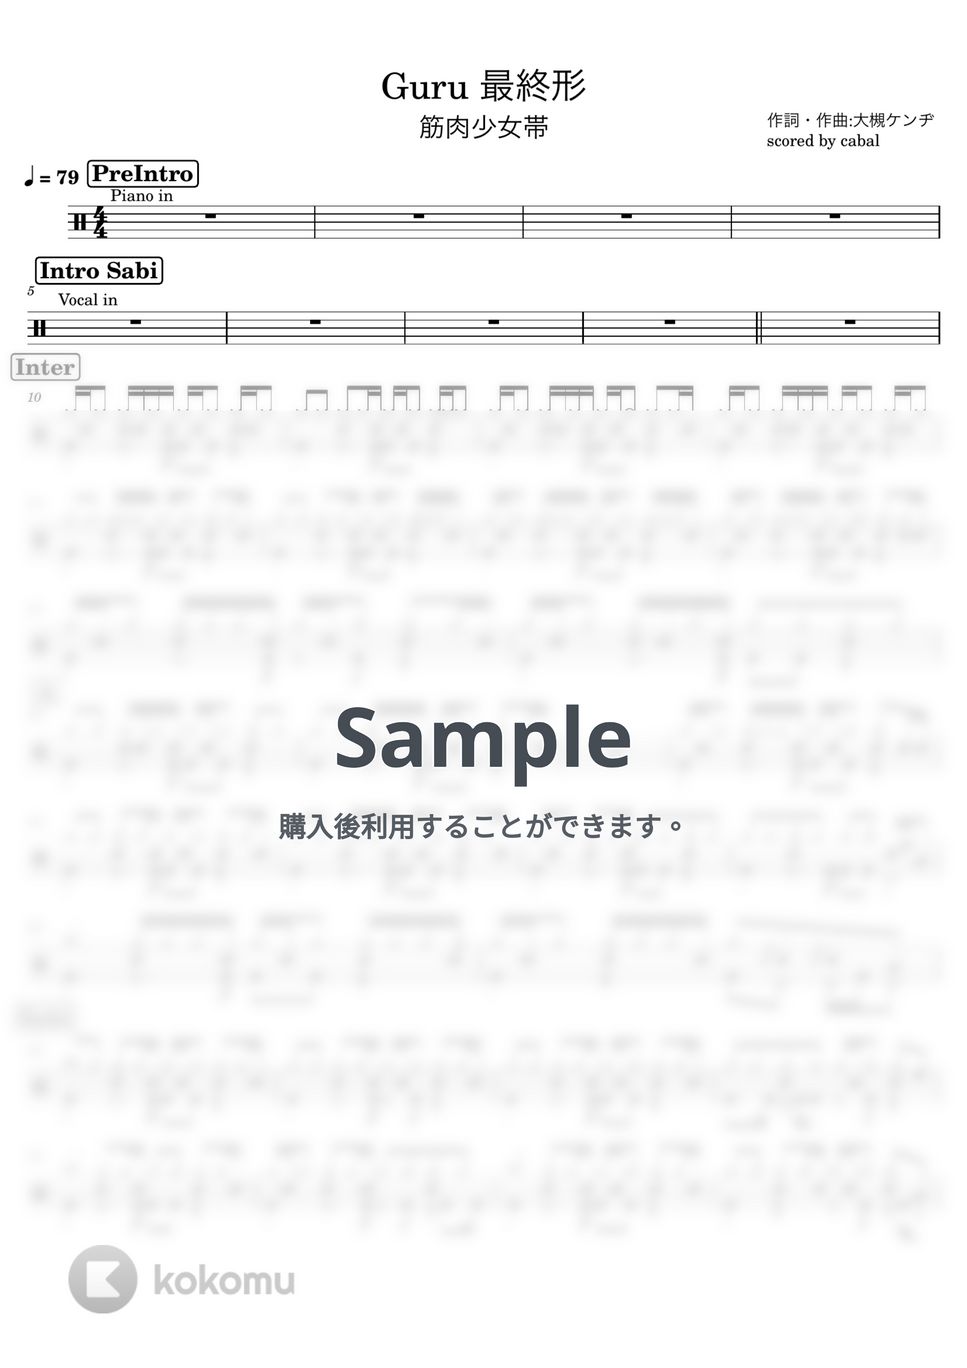 筋肉少女帯 - Guru 最終形 (ドラム譜面) by cabal